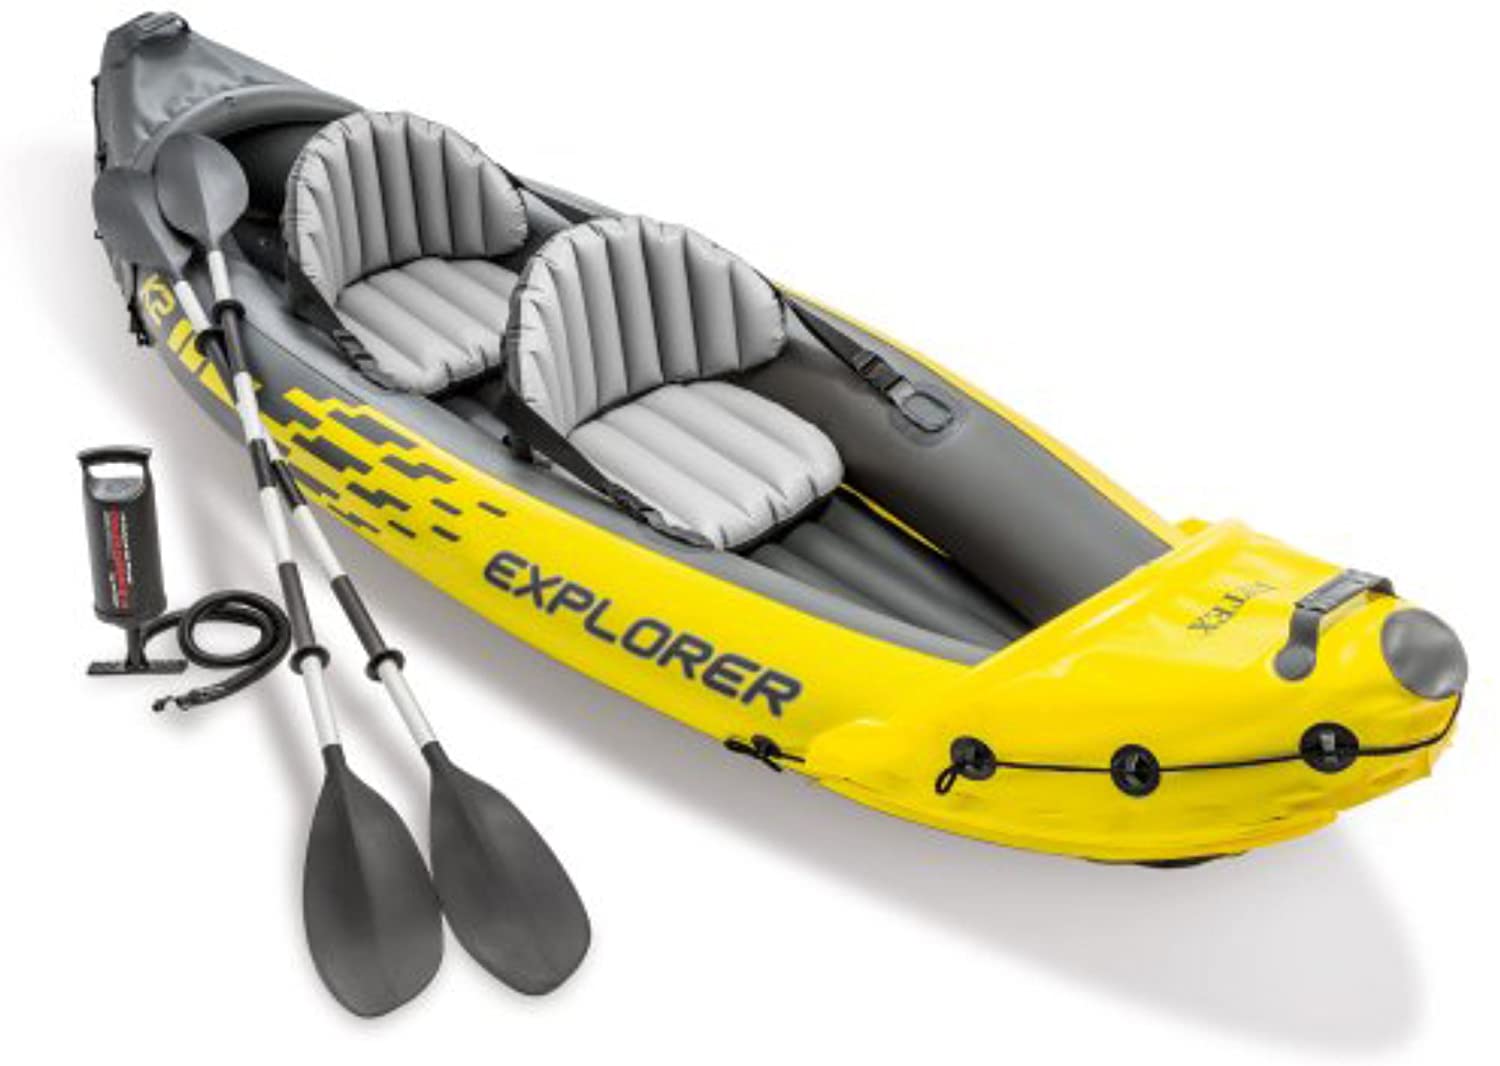 Get Intex Explorer K2 Kayak - best price deal - for $199.99 including free shipping